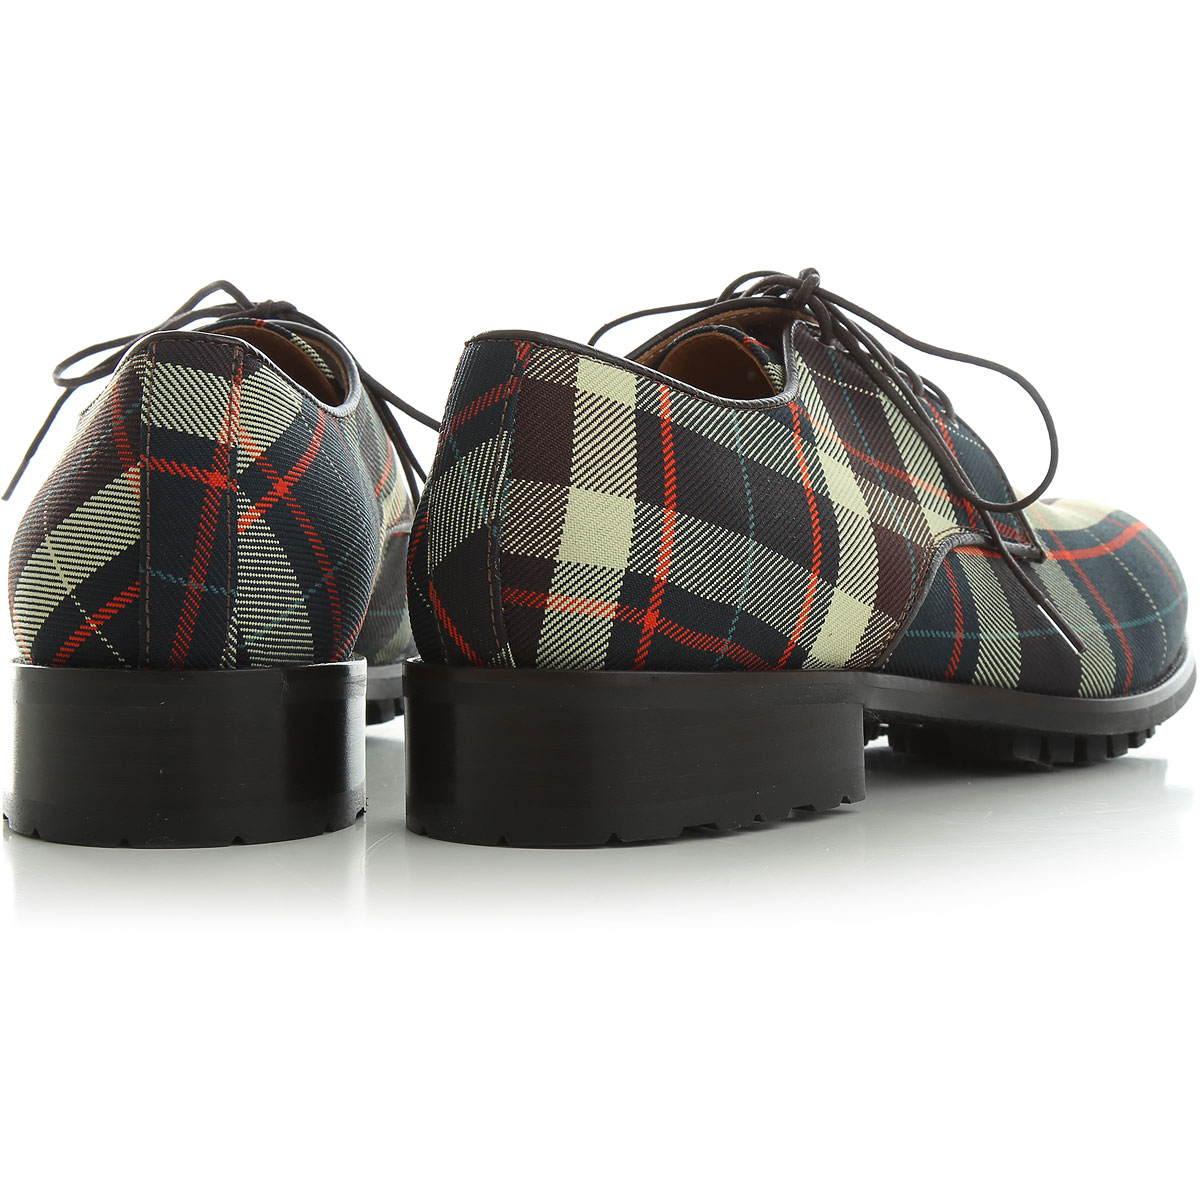 Mens Shoes Vivienne Westwood, Style code: 72030001m-w007k-0201